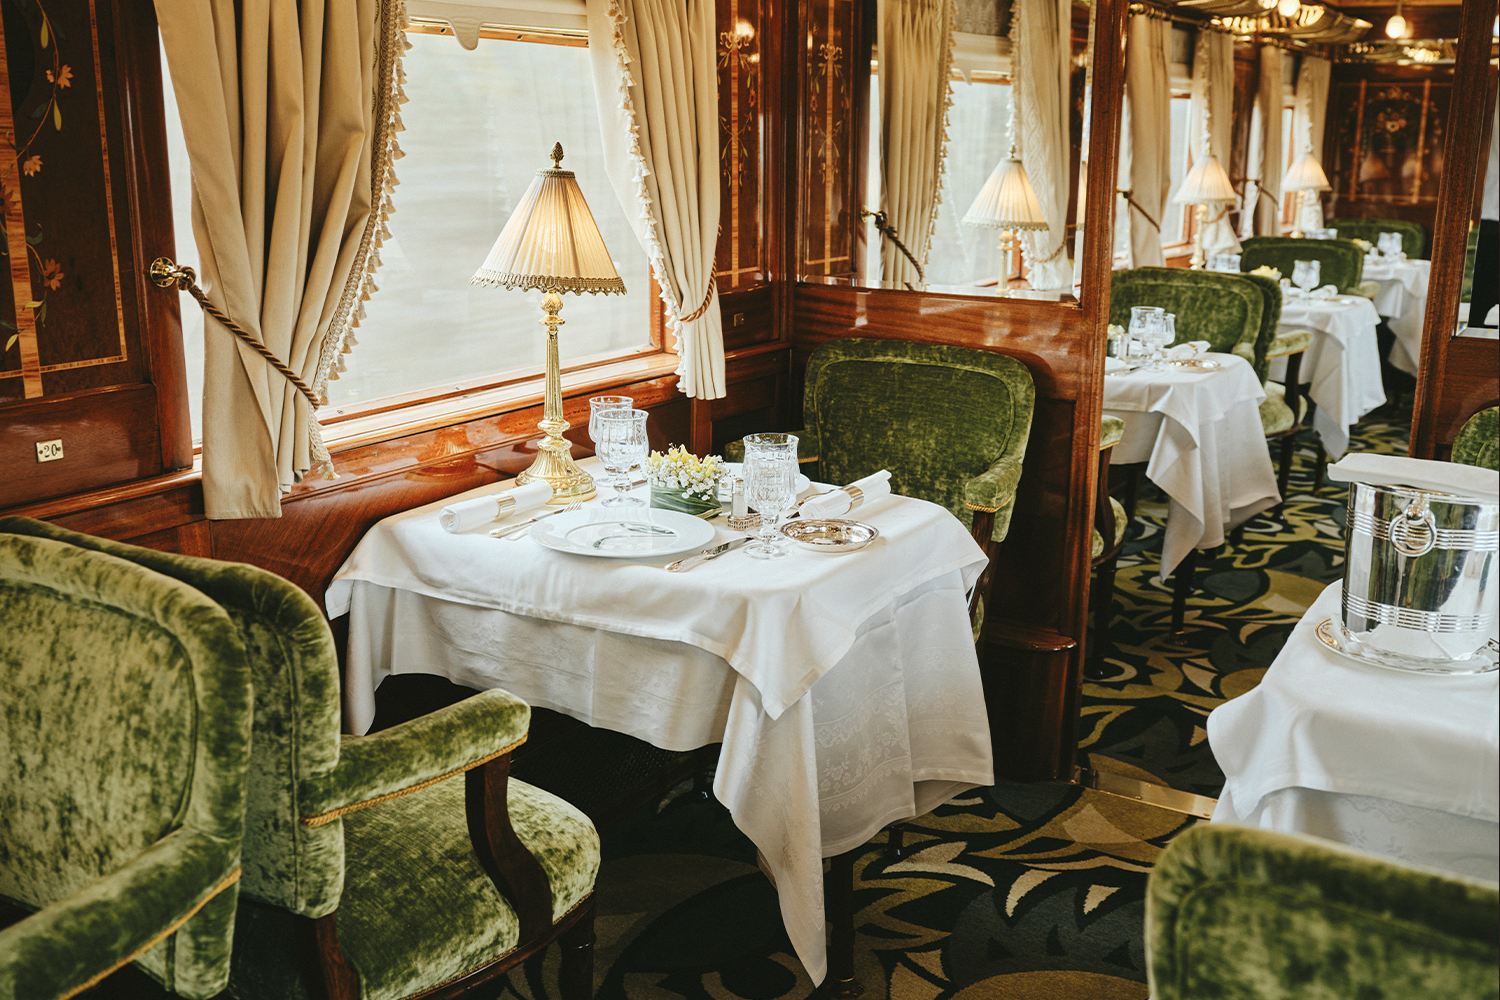 The Restaurant car on the Venice Simplon-Orient-Express train